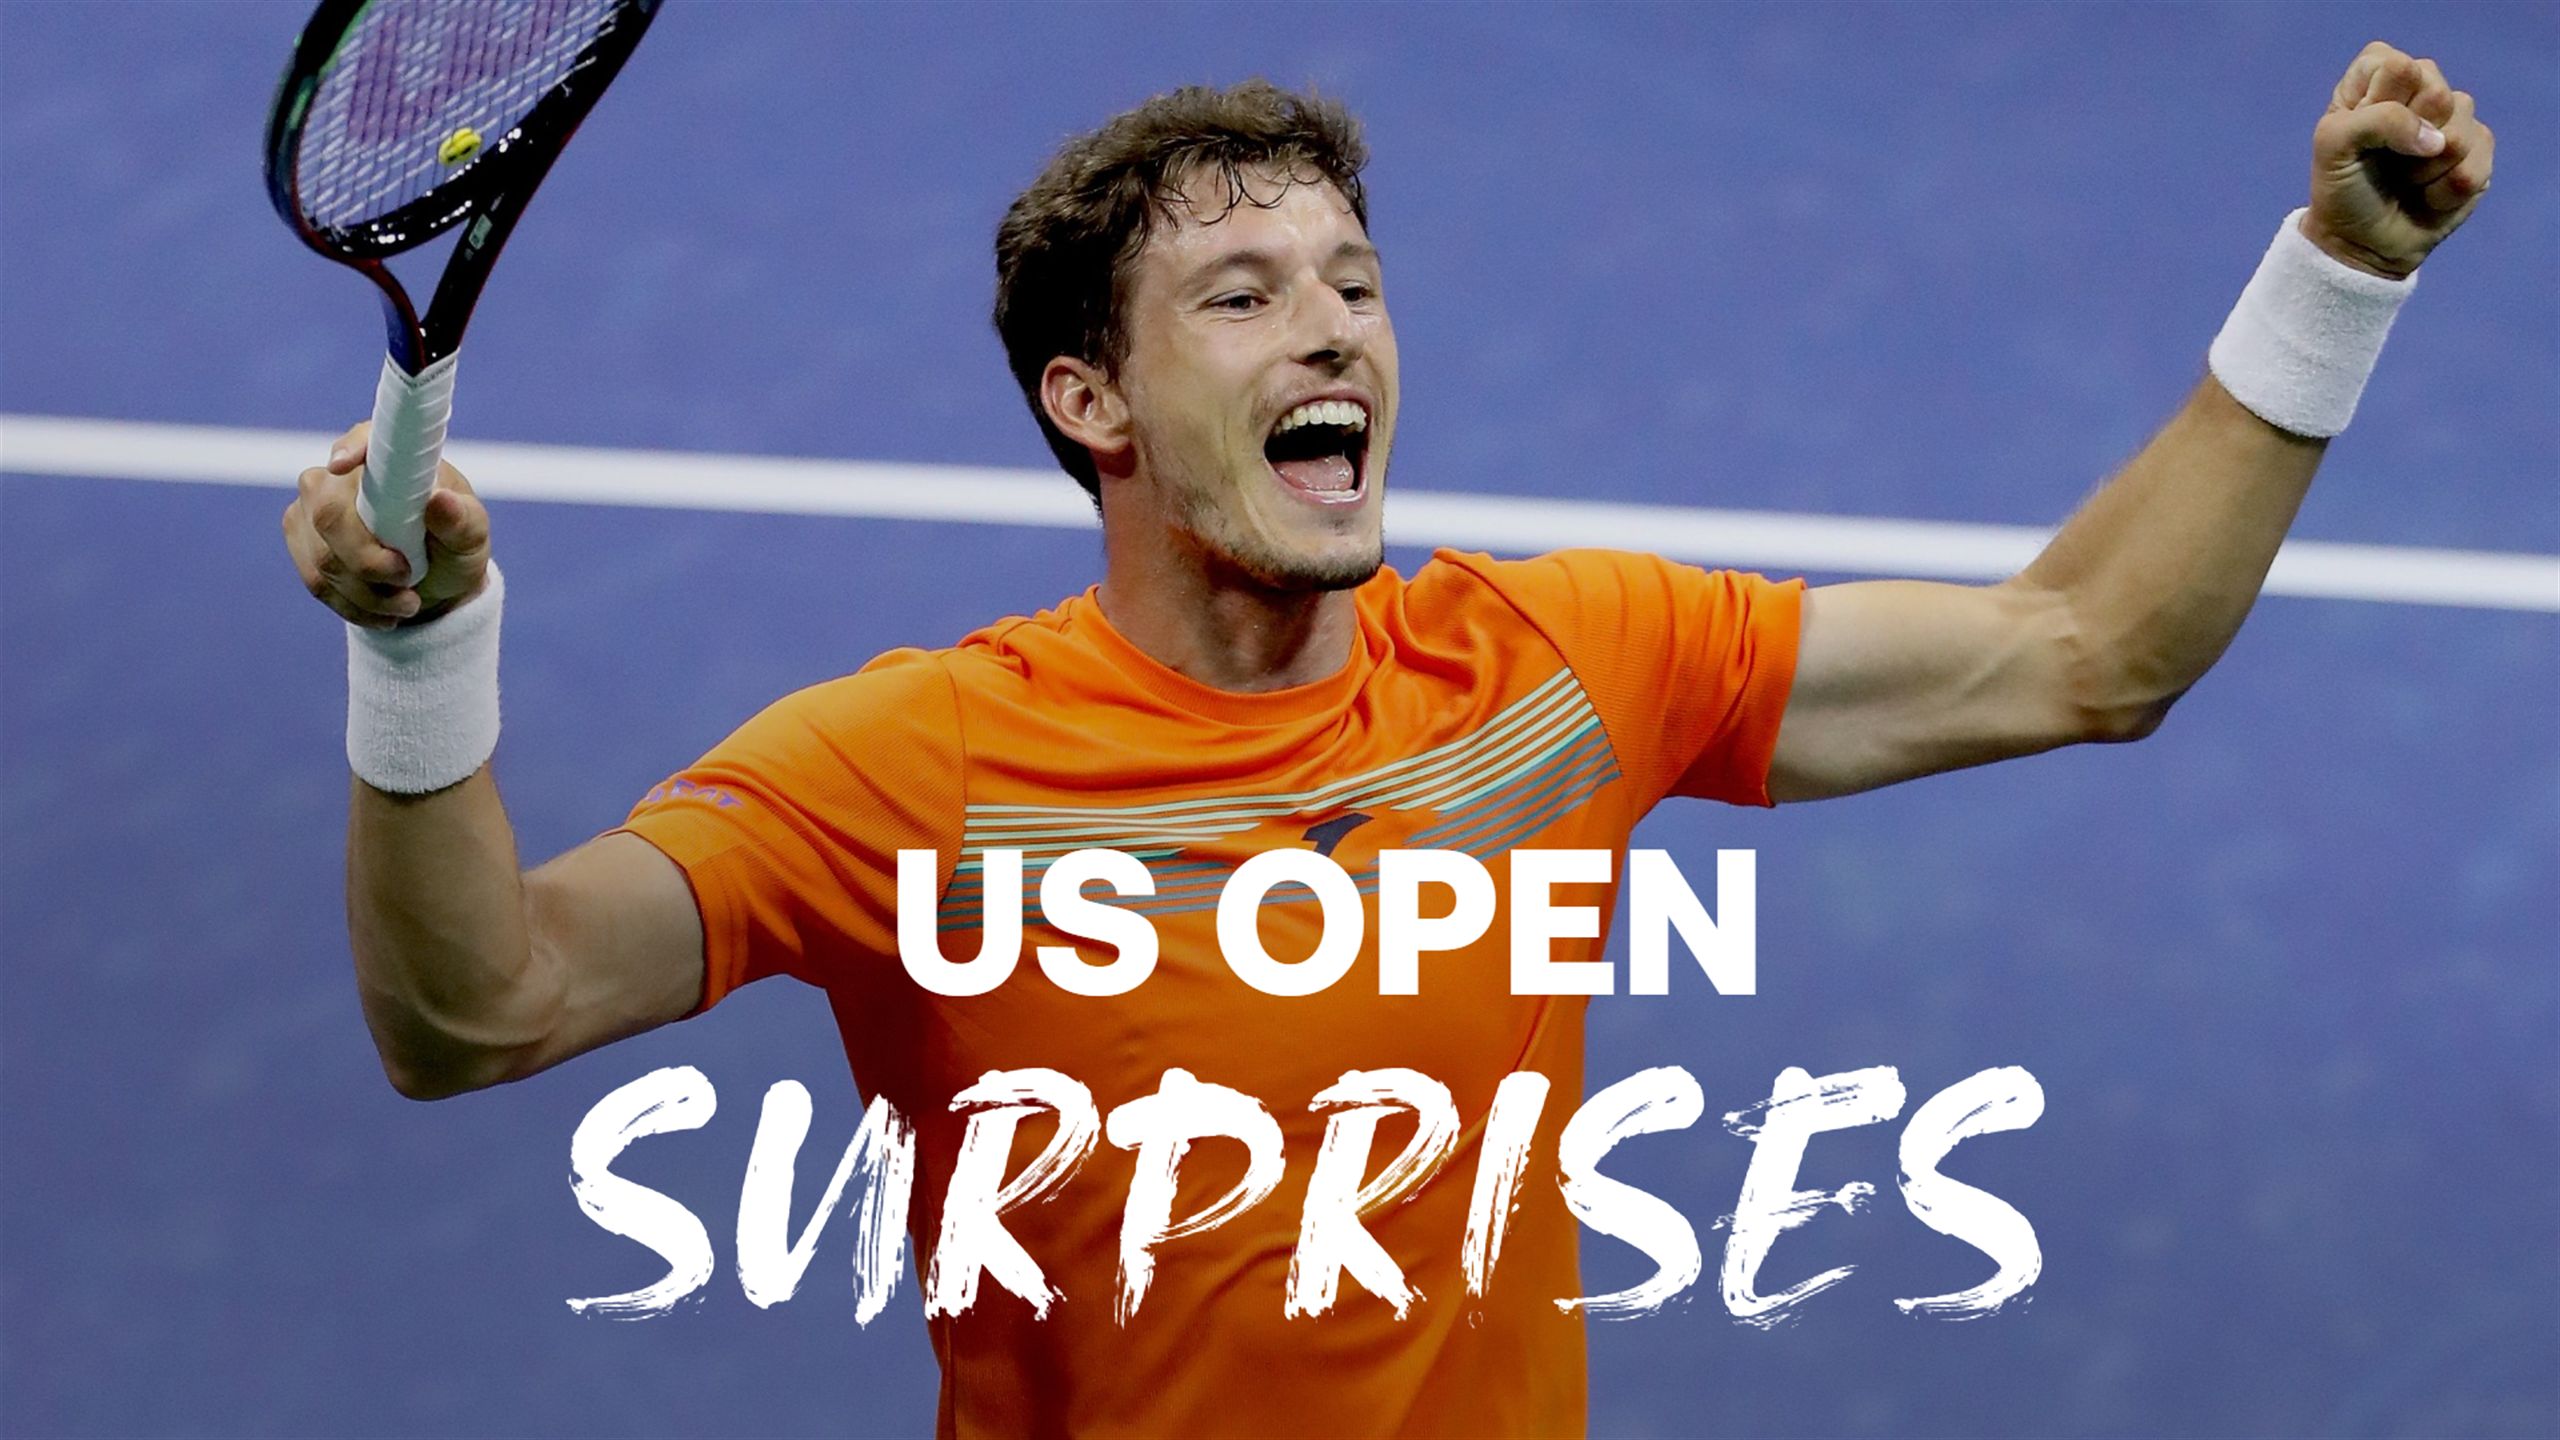 Tennis news - Denis Shapovalov, Pablo Carreno Busta, Danielle Collins - who are the potential surprise US Open winners?